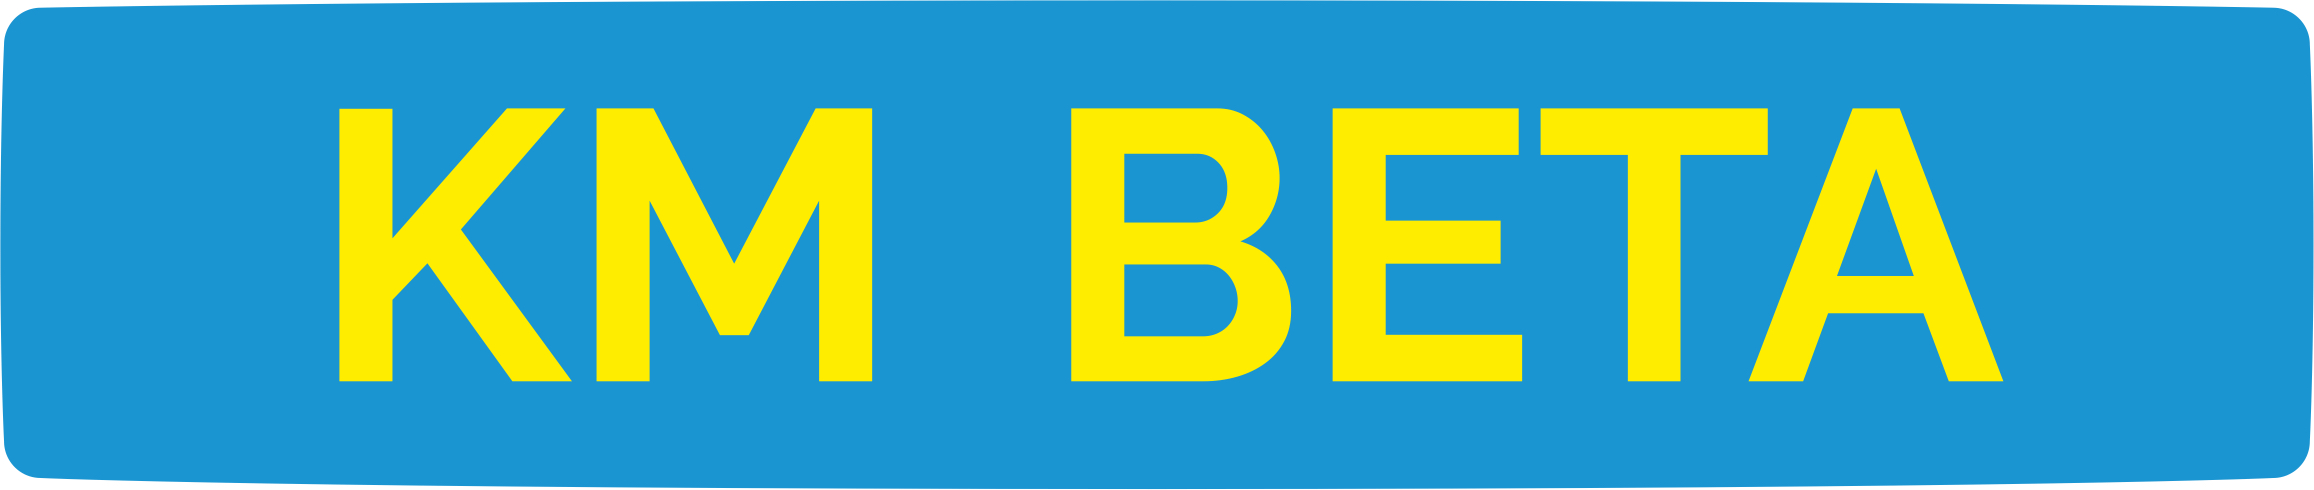 KM BETA logo